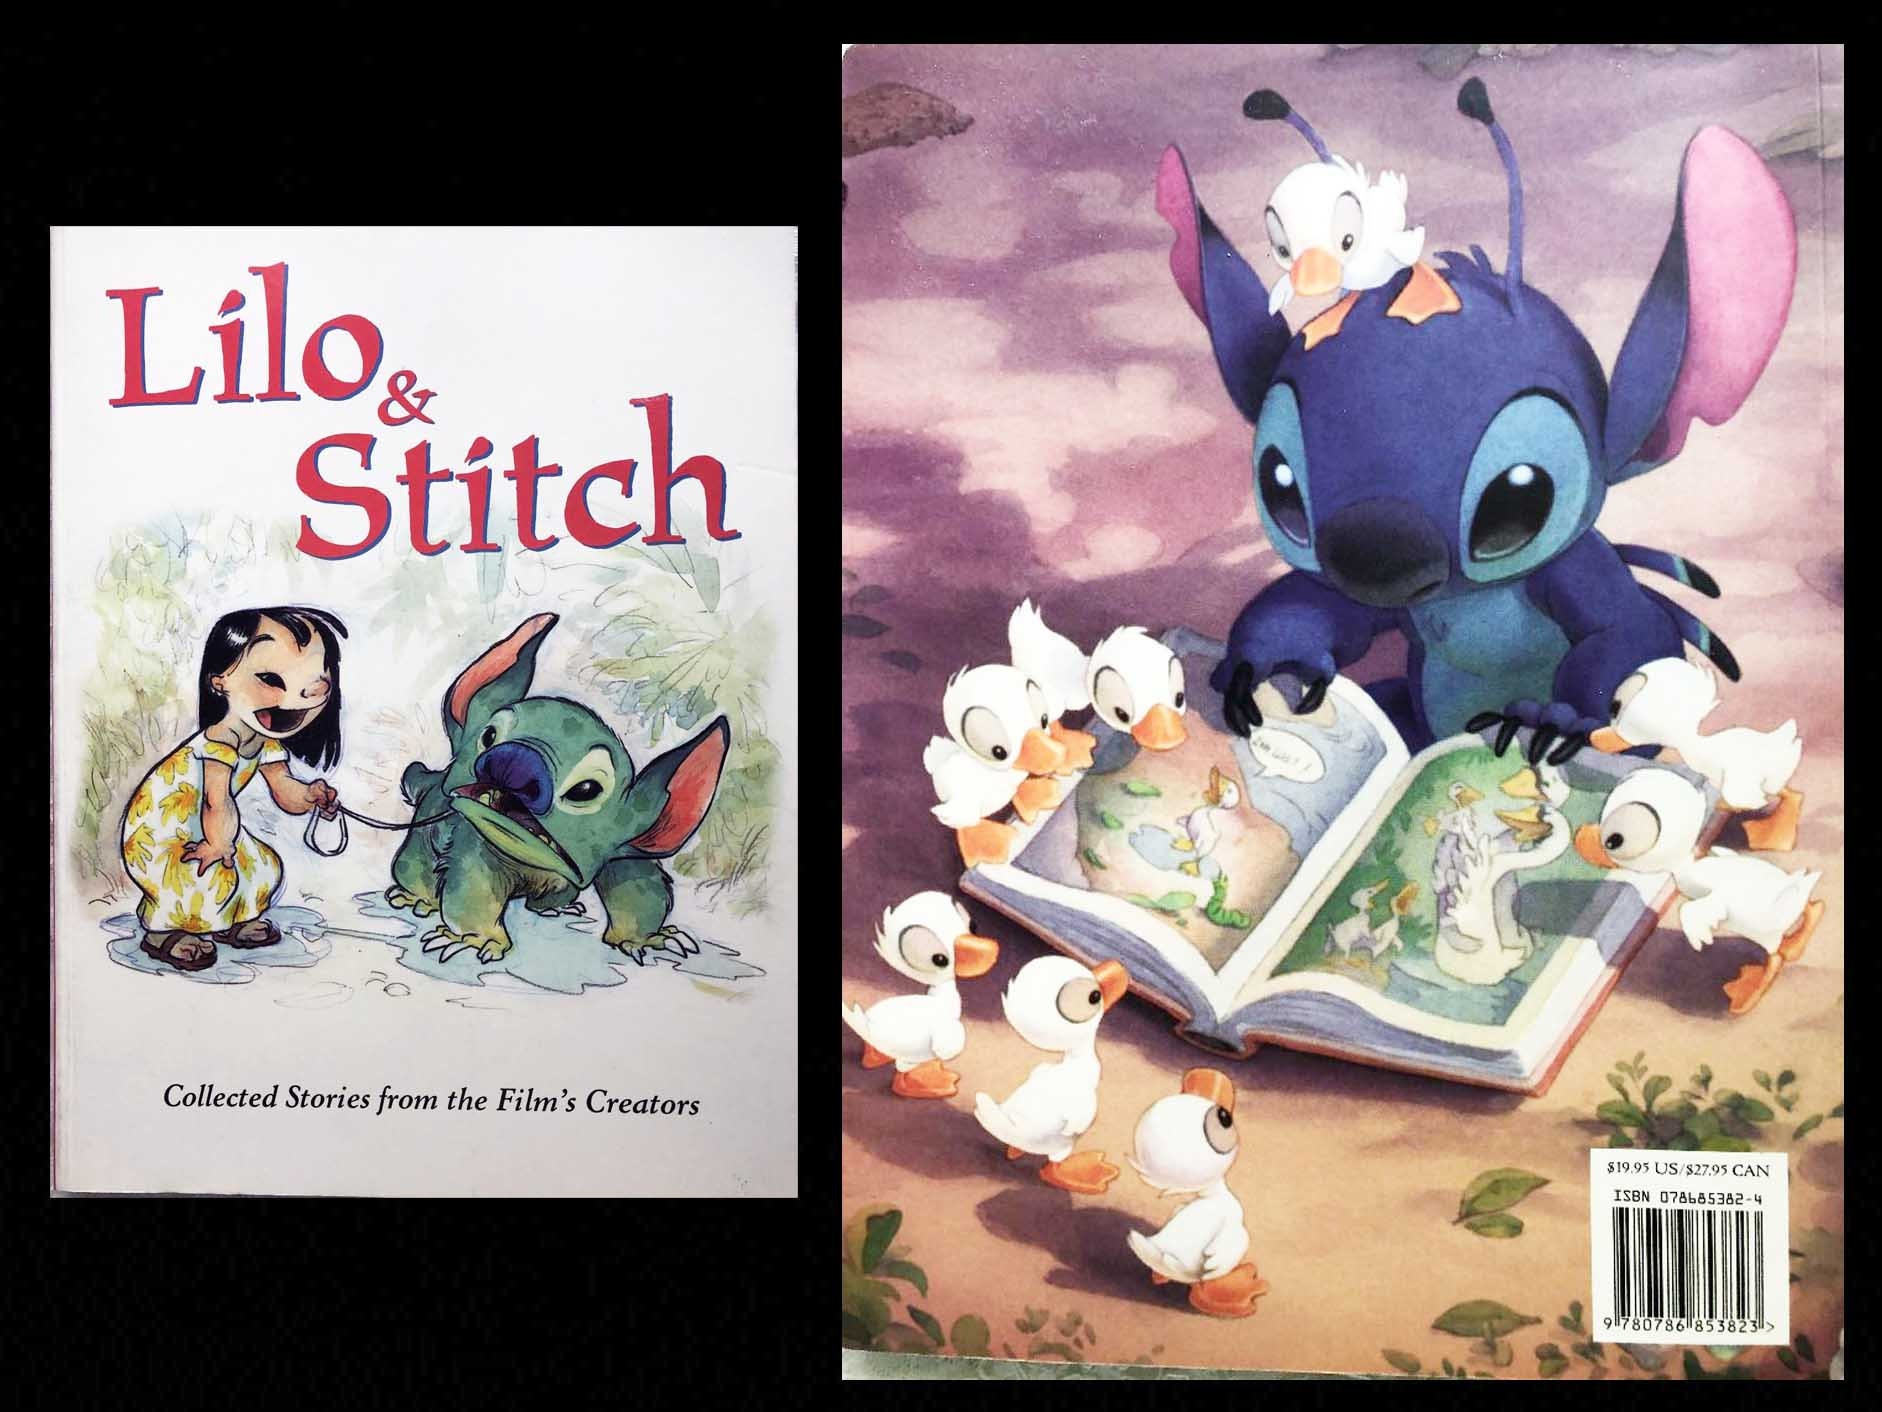 Disney Lilo & Stitch Serre-Livre Stitch Nomming 9cm